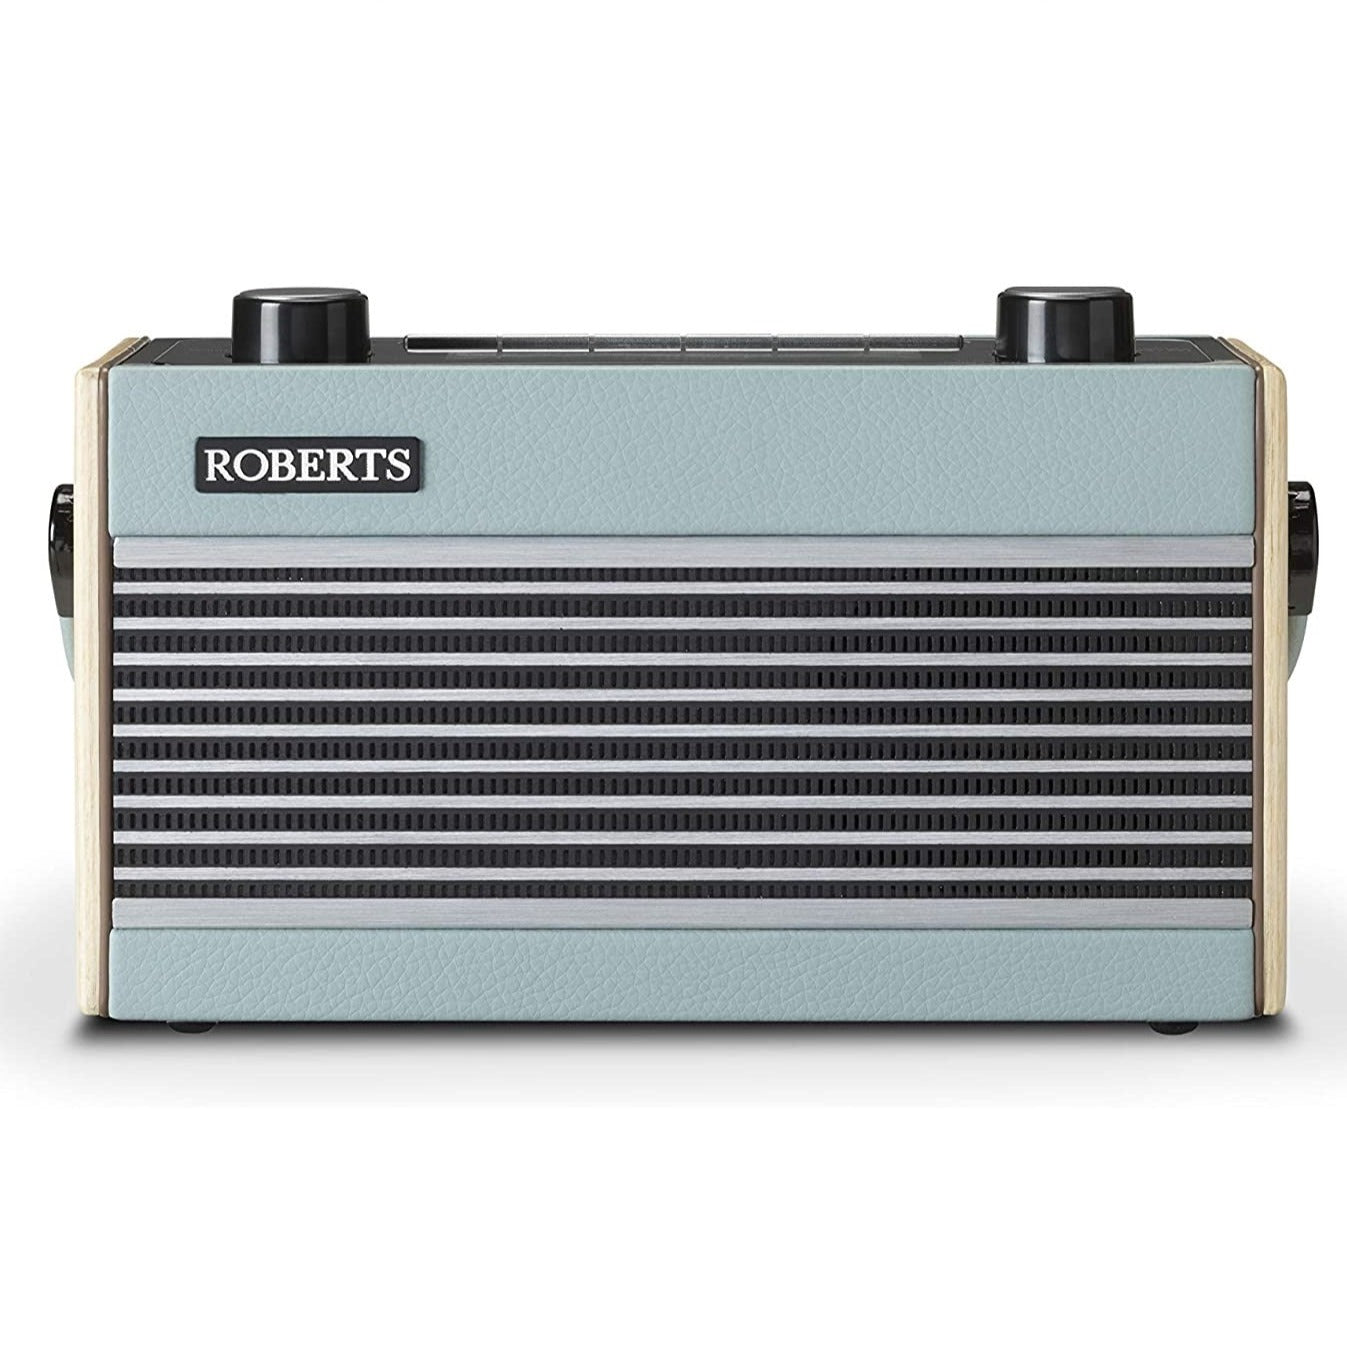 Roberts Rambler BT DAB+ Radio, Retro Style, Bluetooth Speaker - Green, Light blue, Navy blue